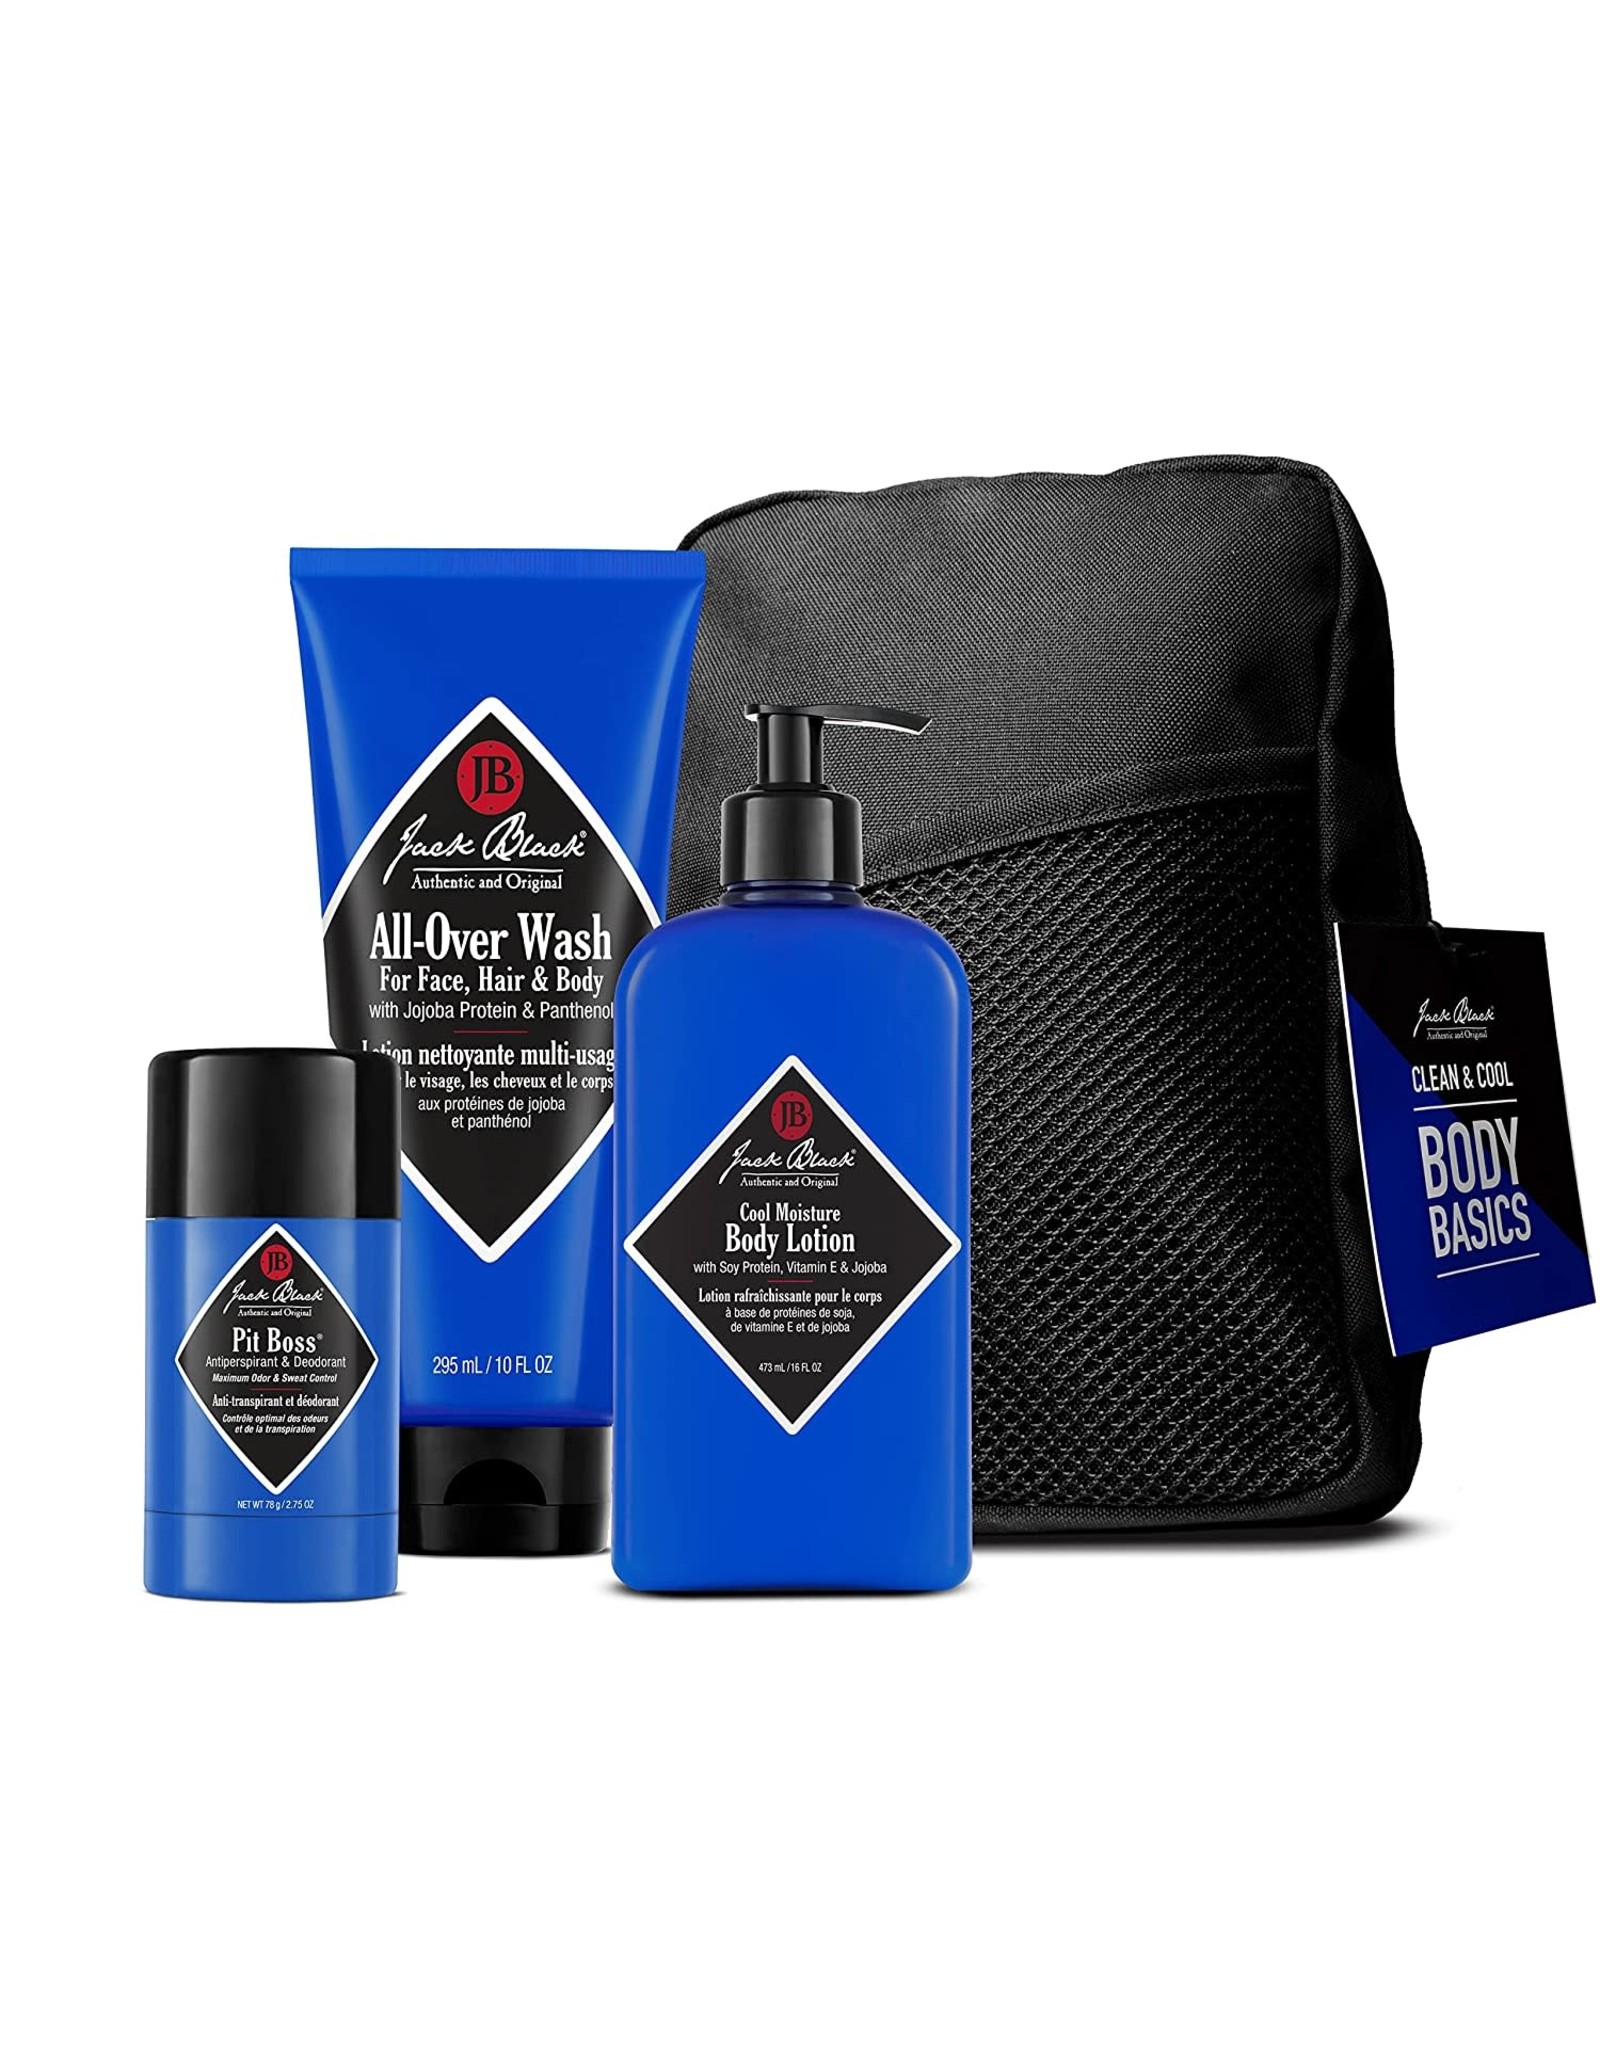 Jack Black Gift Set Clean and Cool Body Basics Set